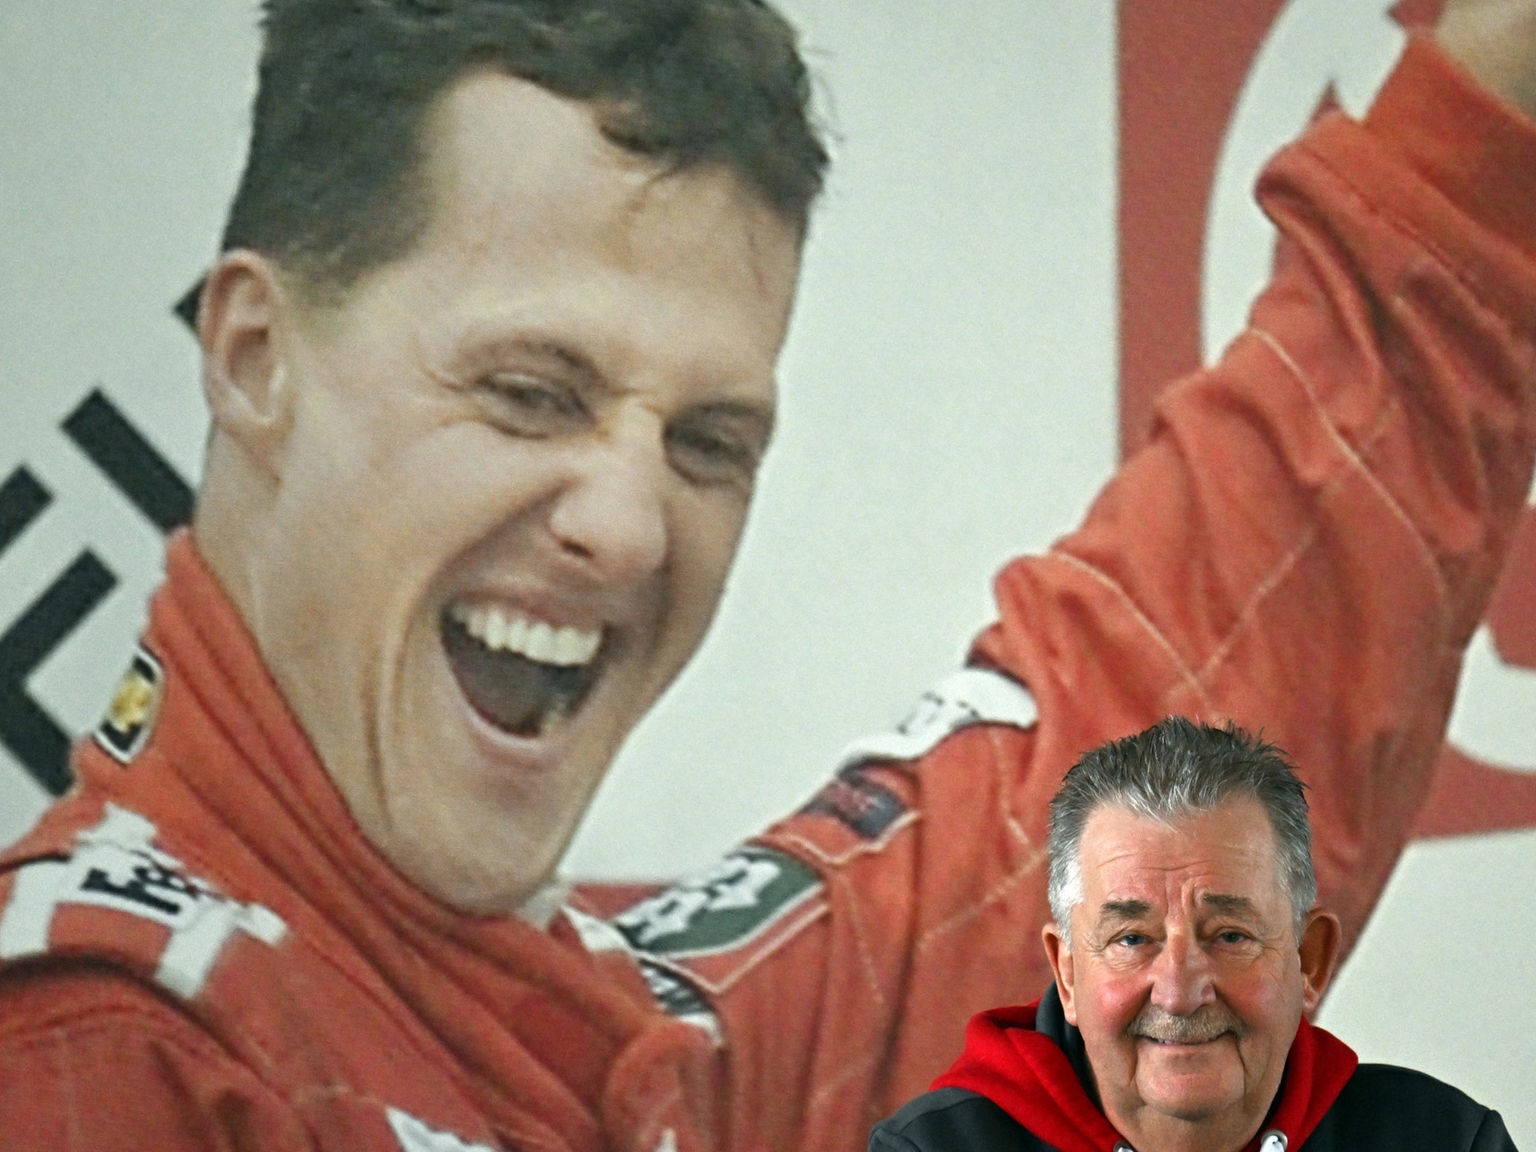 Michael Schumacher  Biography, Wins, Championships, & Facts